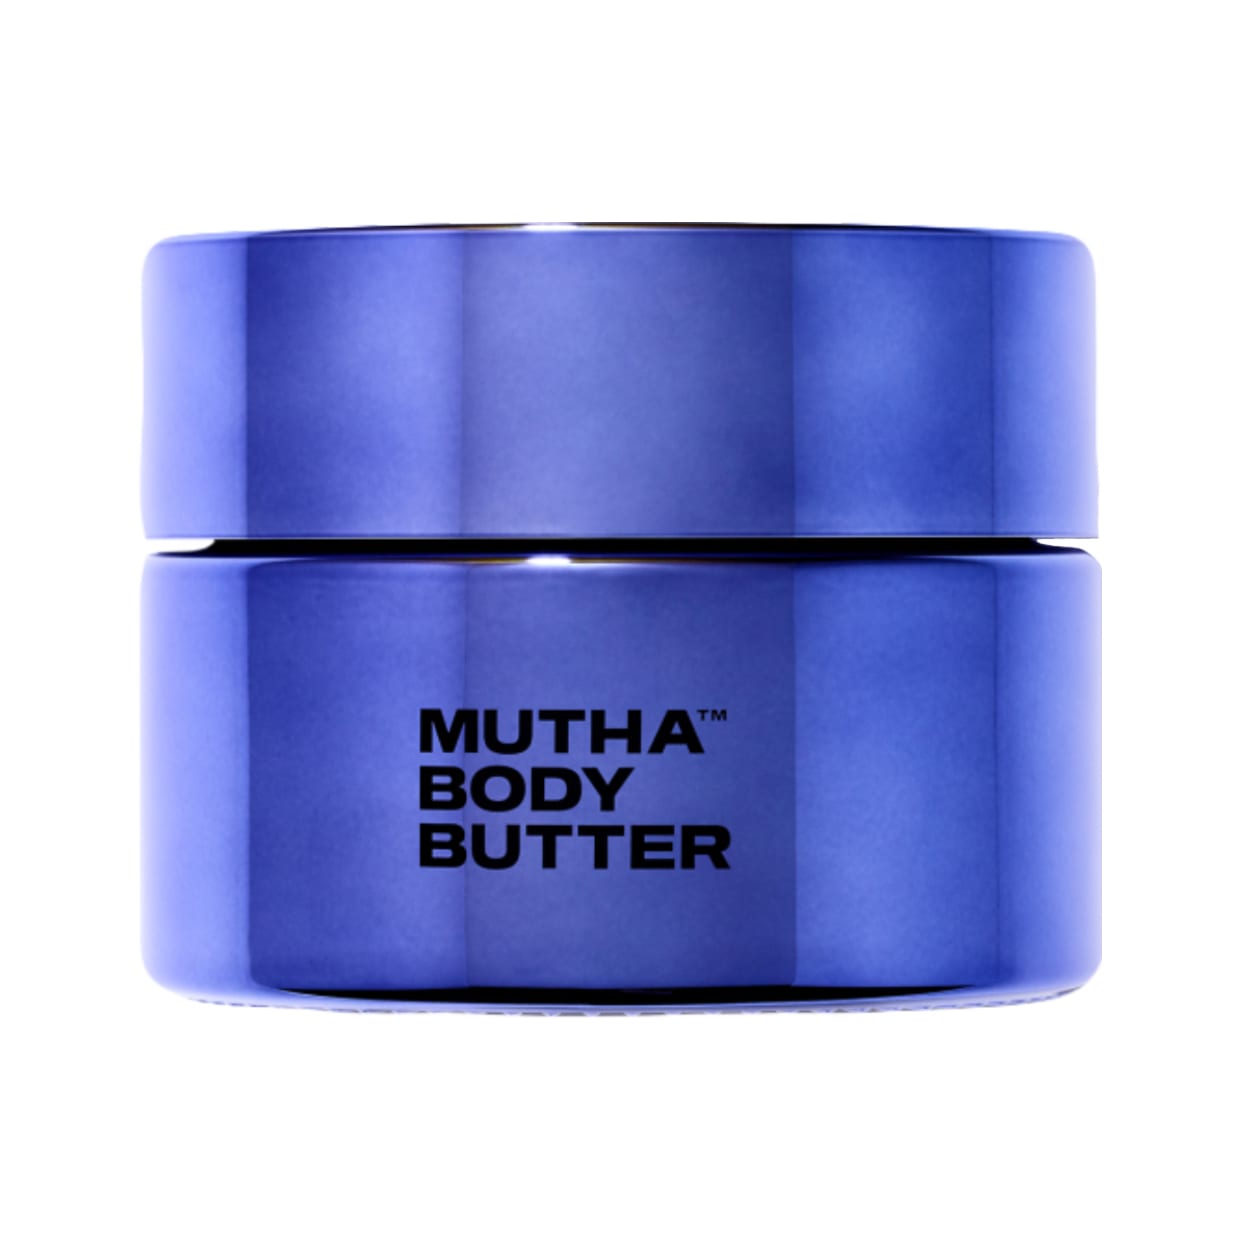 A blue jar of moisturizer.